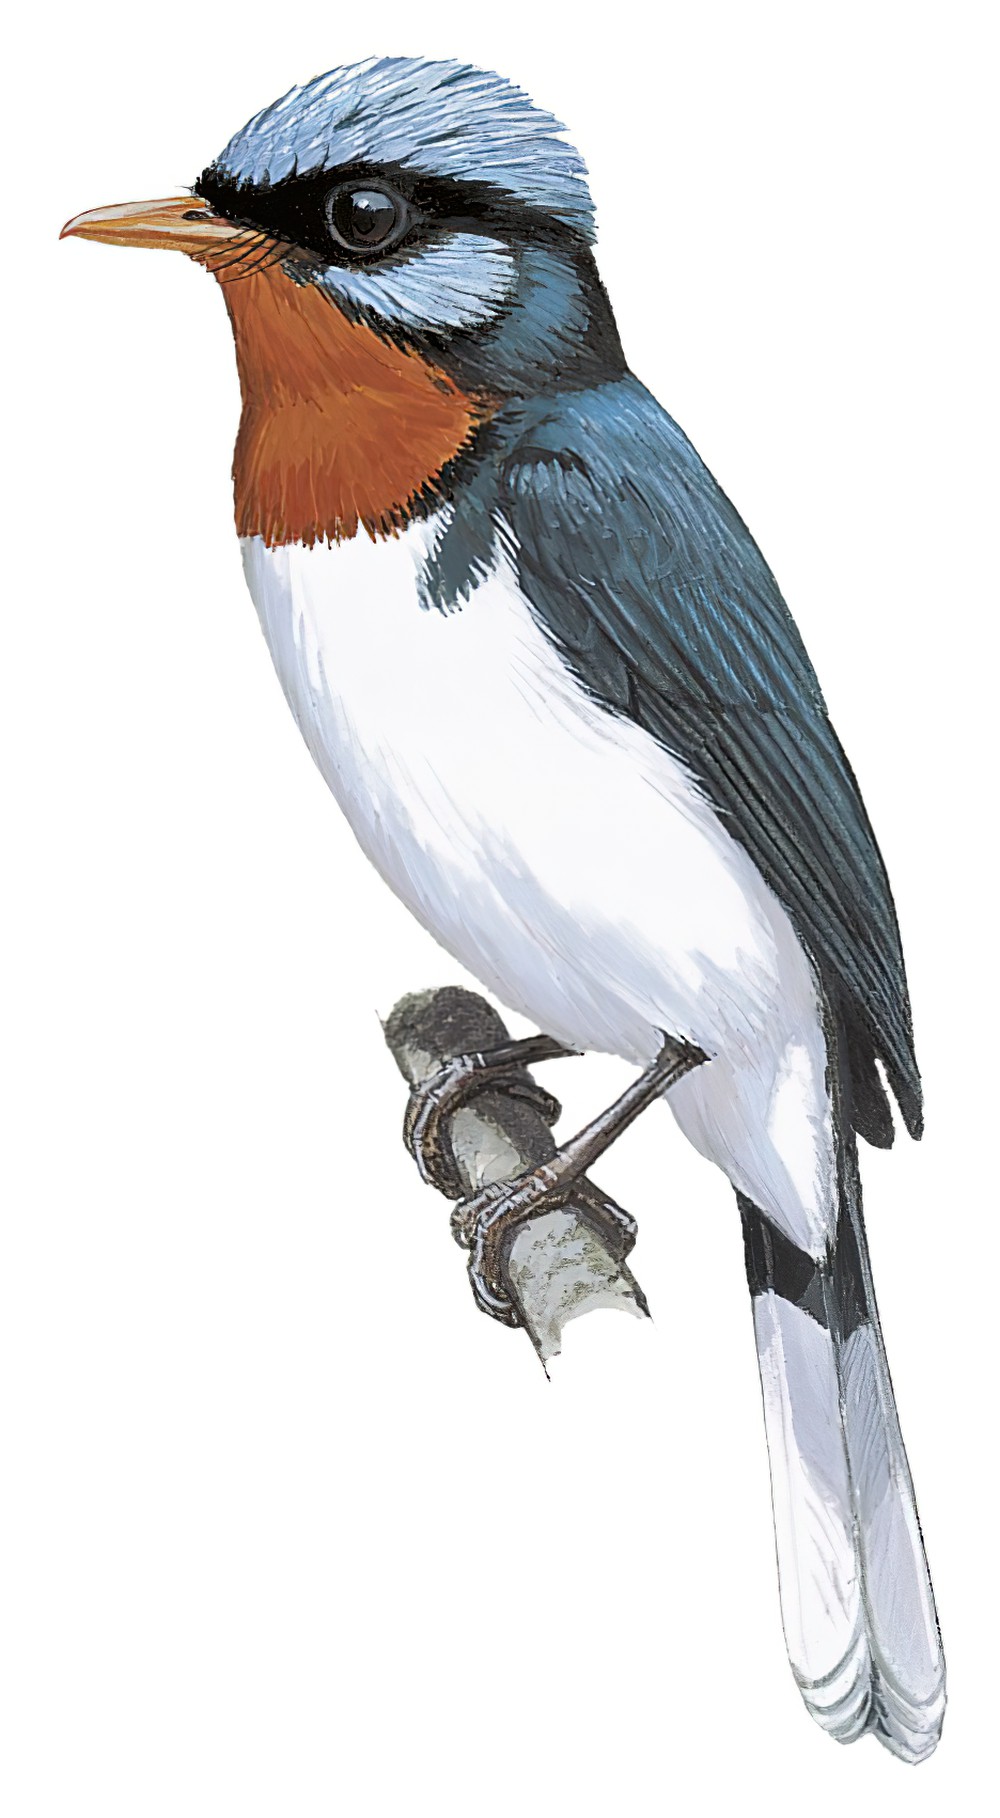 栗喉阔嘴鹟 / Chestnut-throated Flycatcher / Myiagra castaneigularis